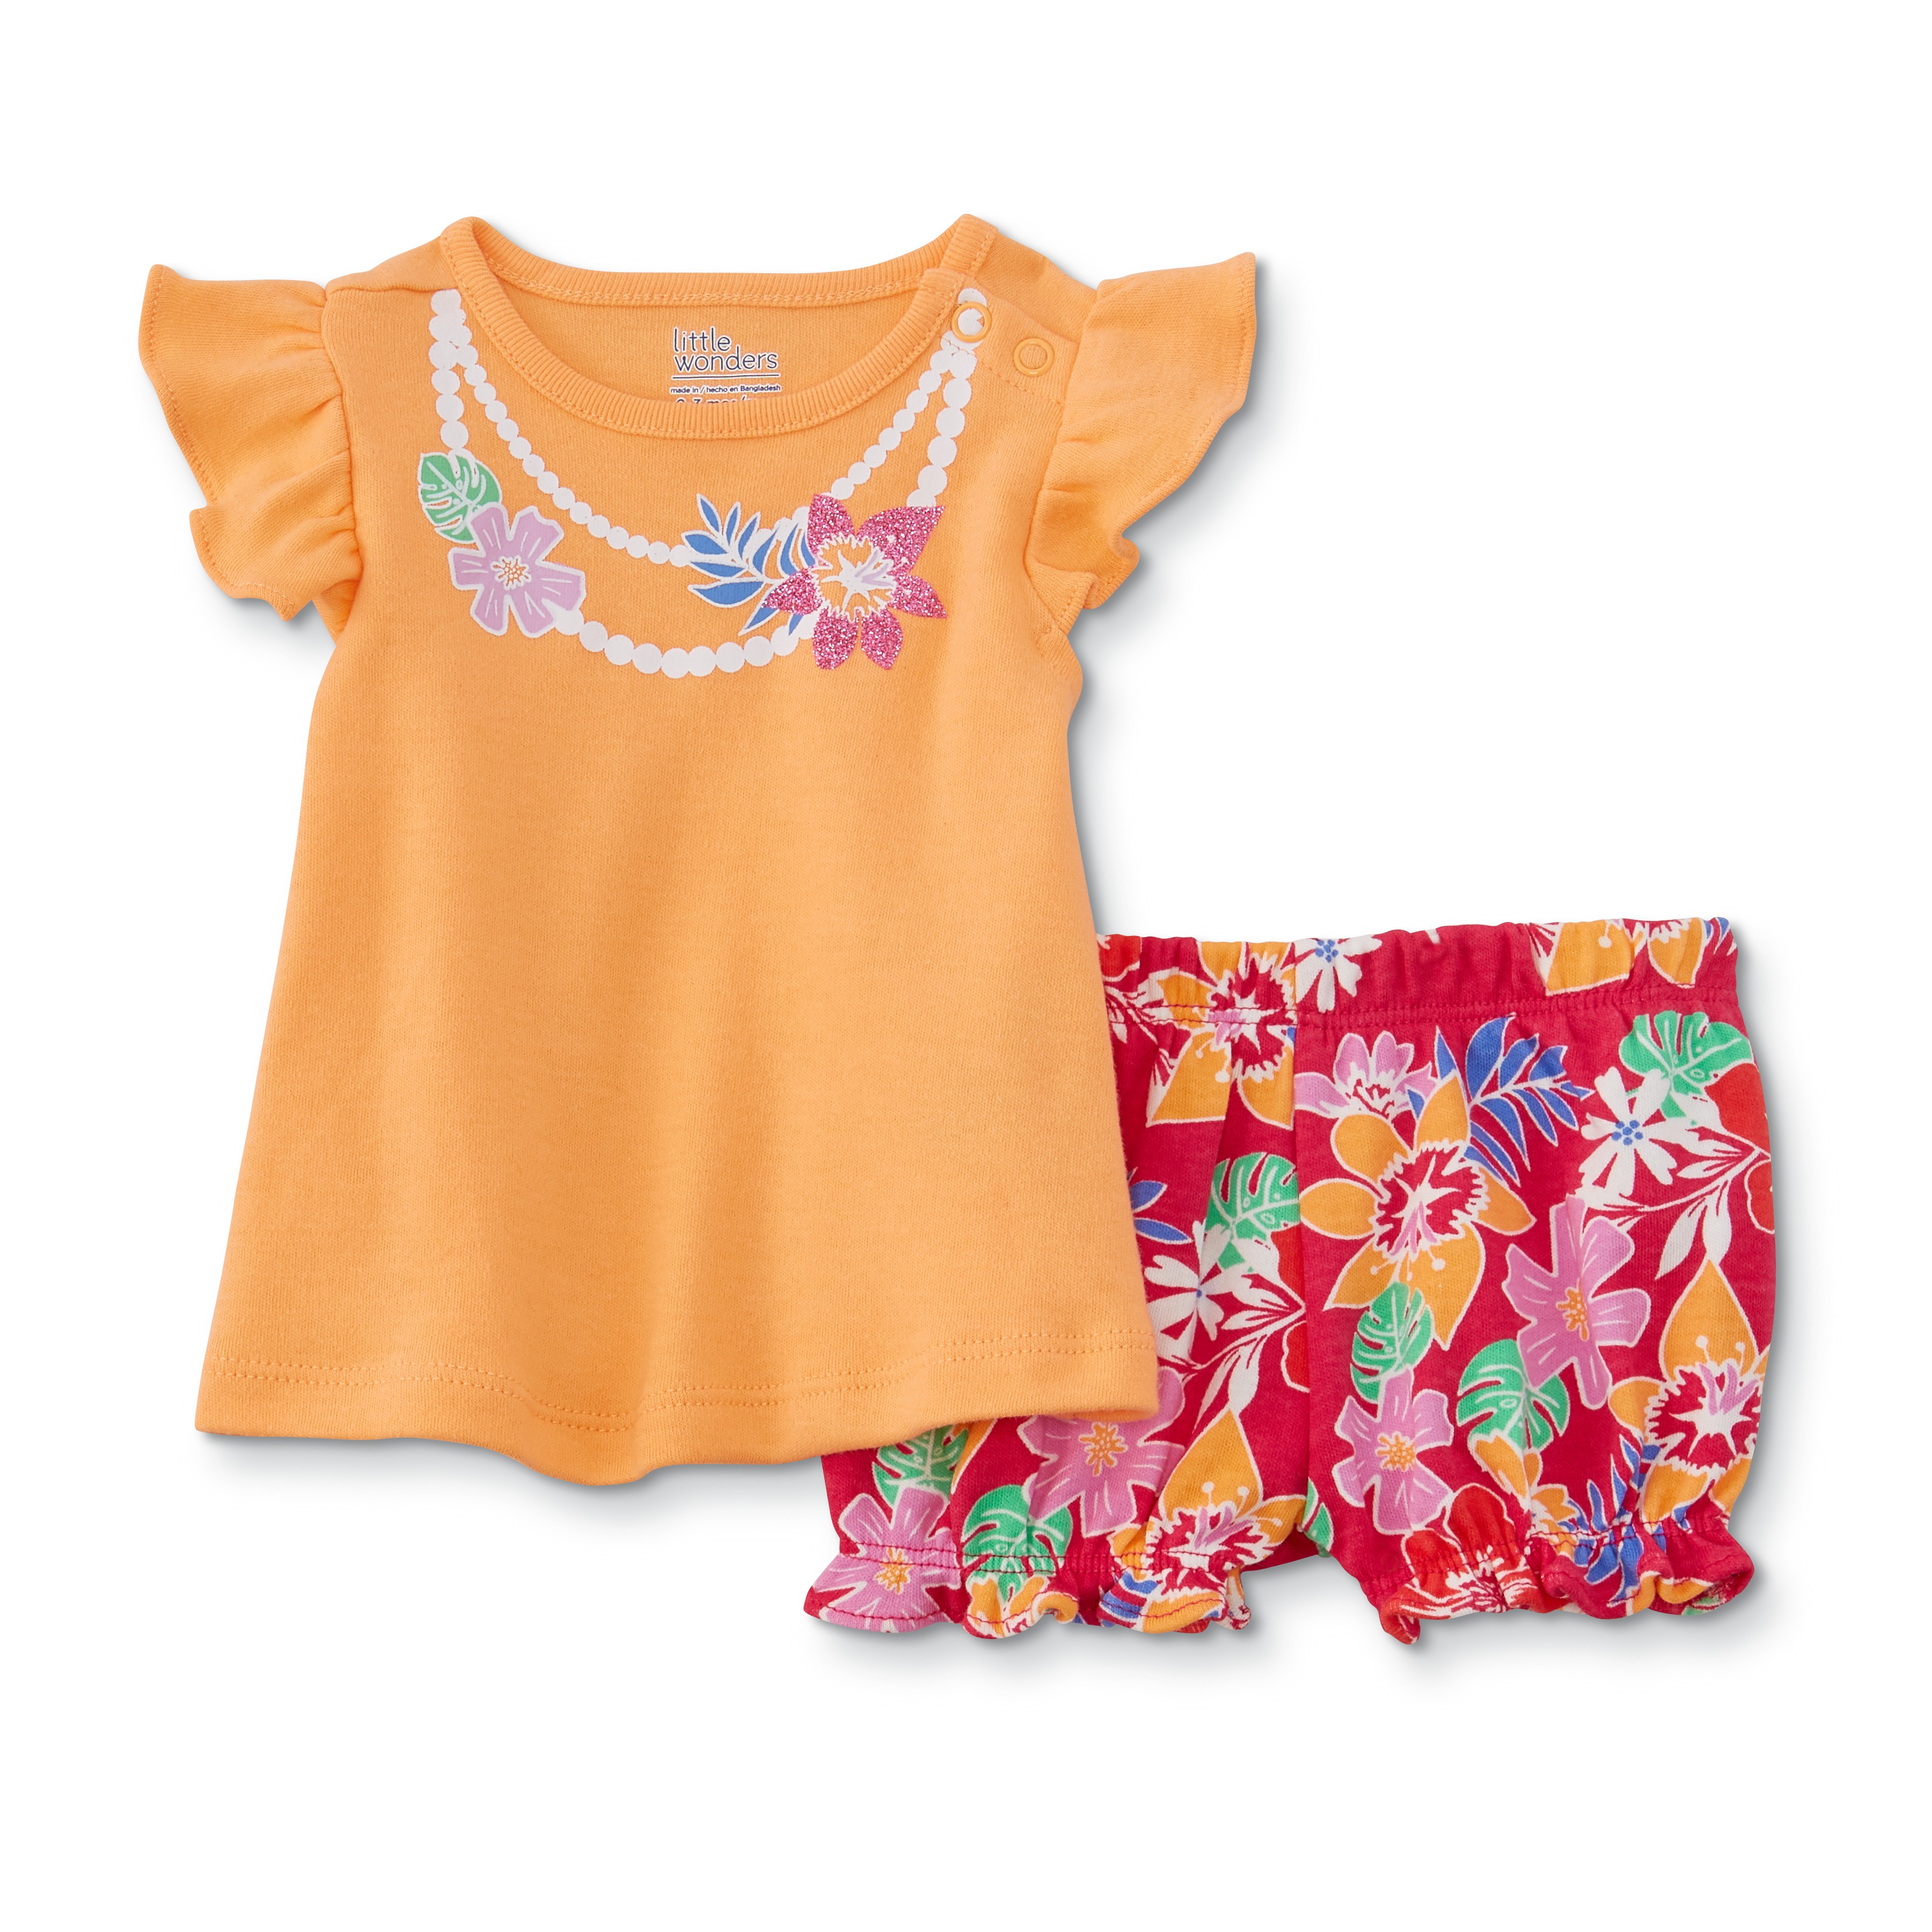 Little Wonders  Infant Girls' Shirt & Shorts - Tropical